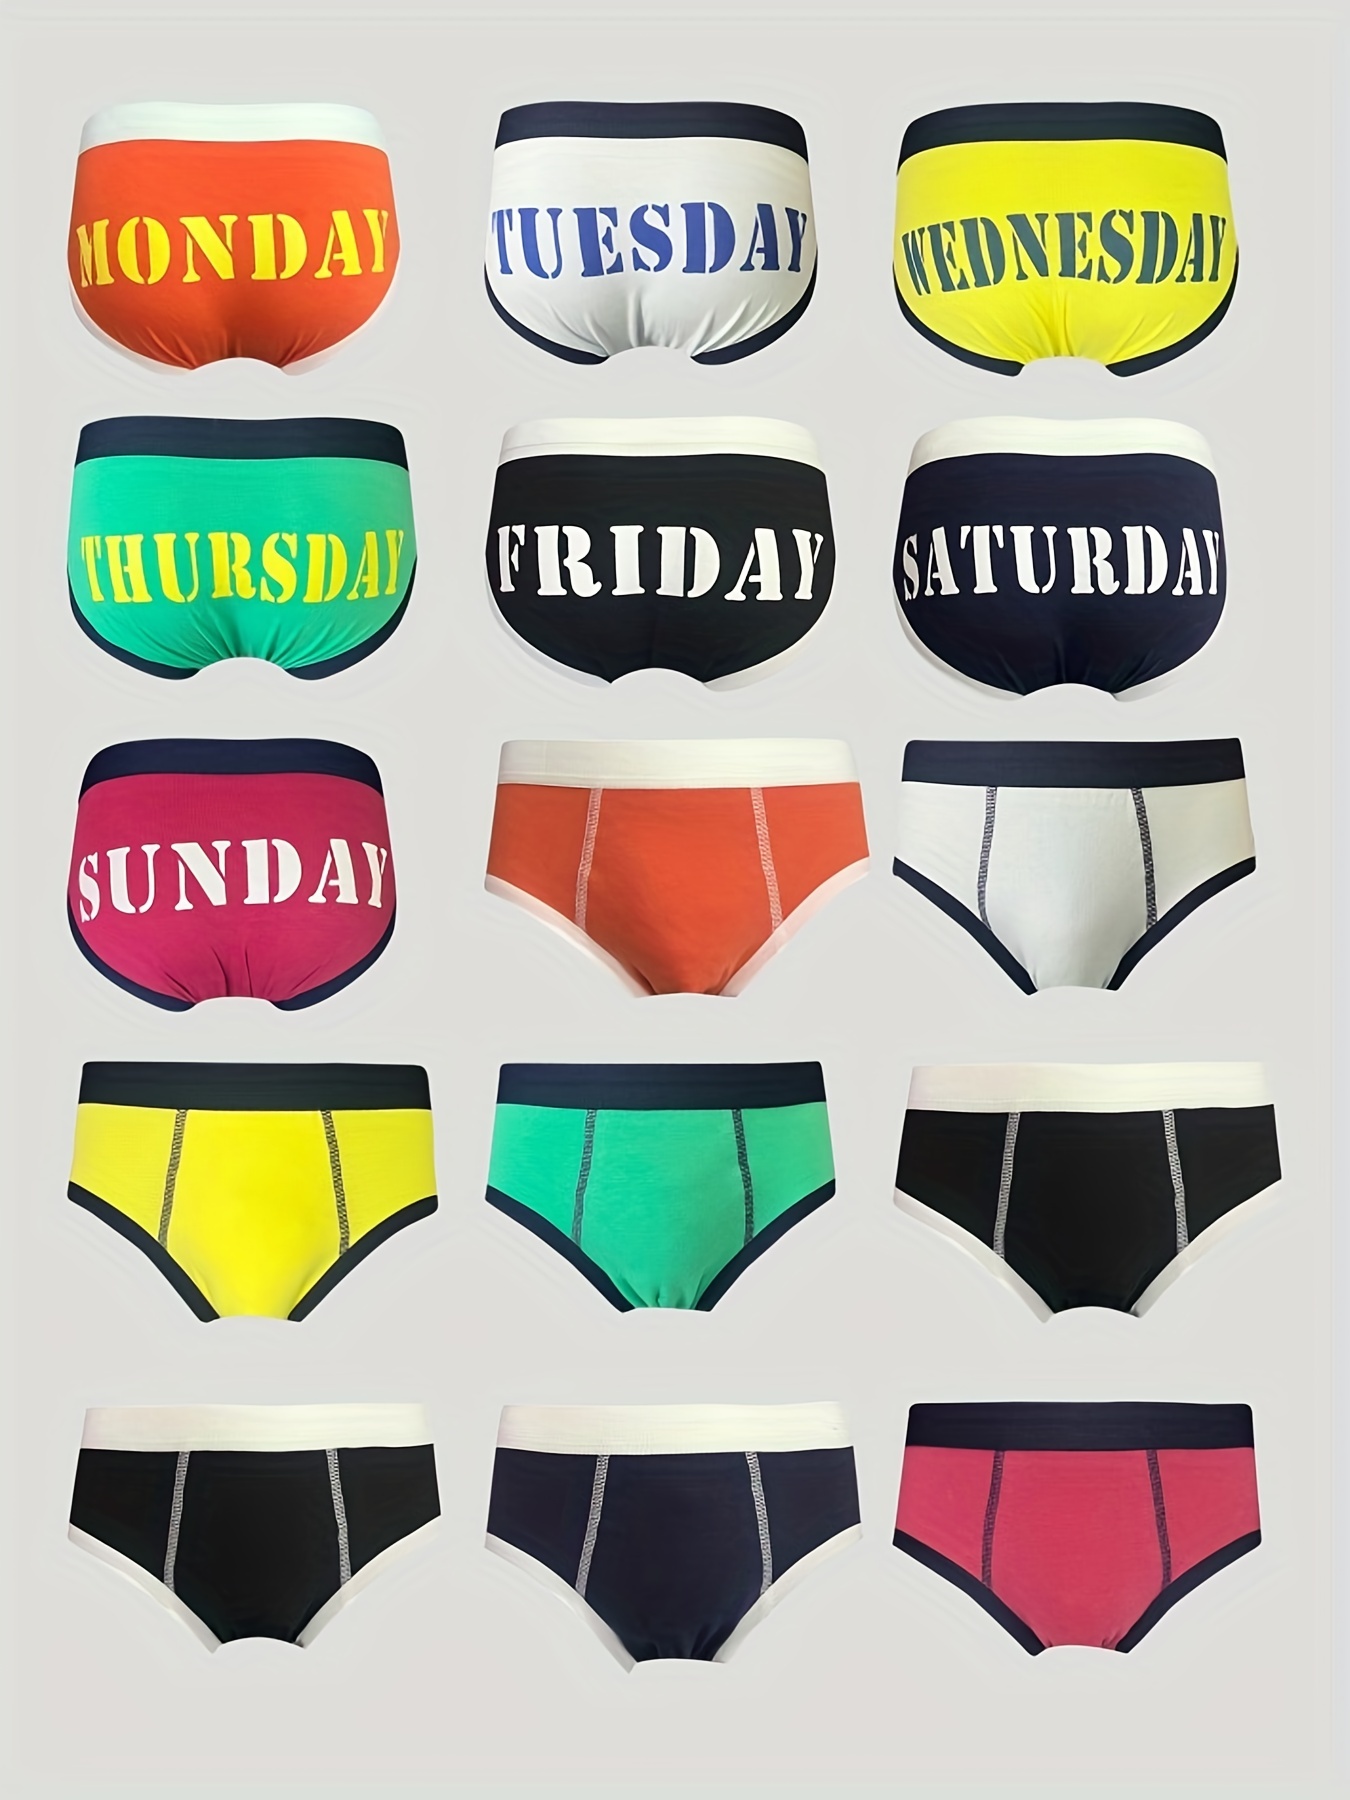 7 Pcs Cute Sunday-Satueday Knickers Week Briefs Underwear Cotton